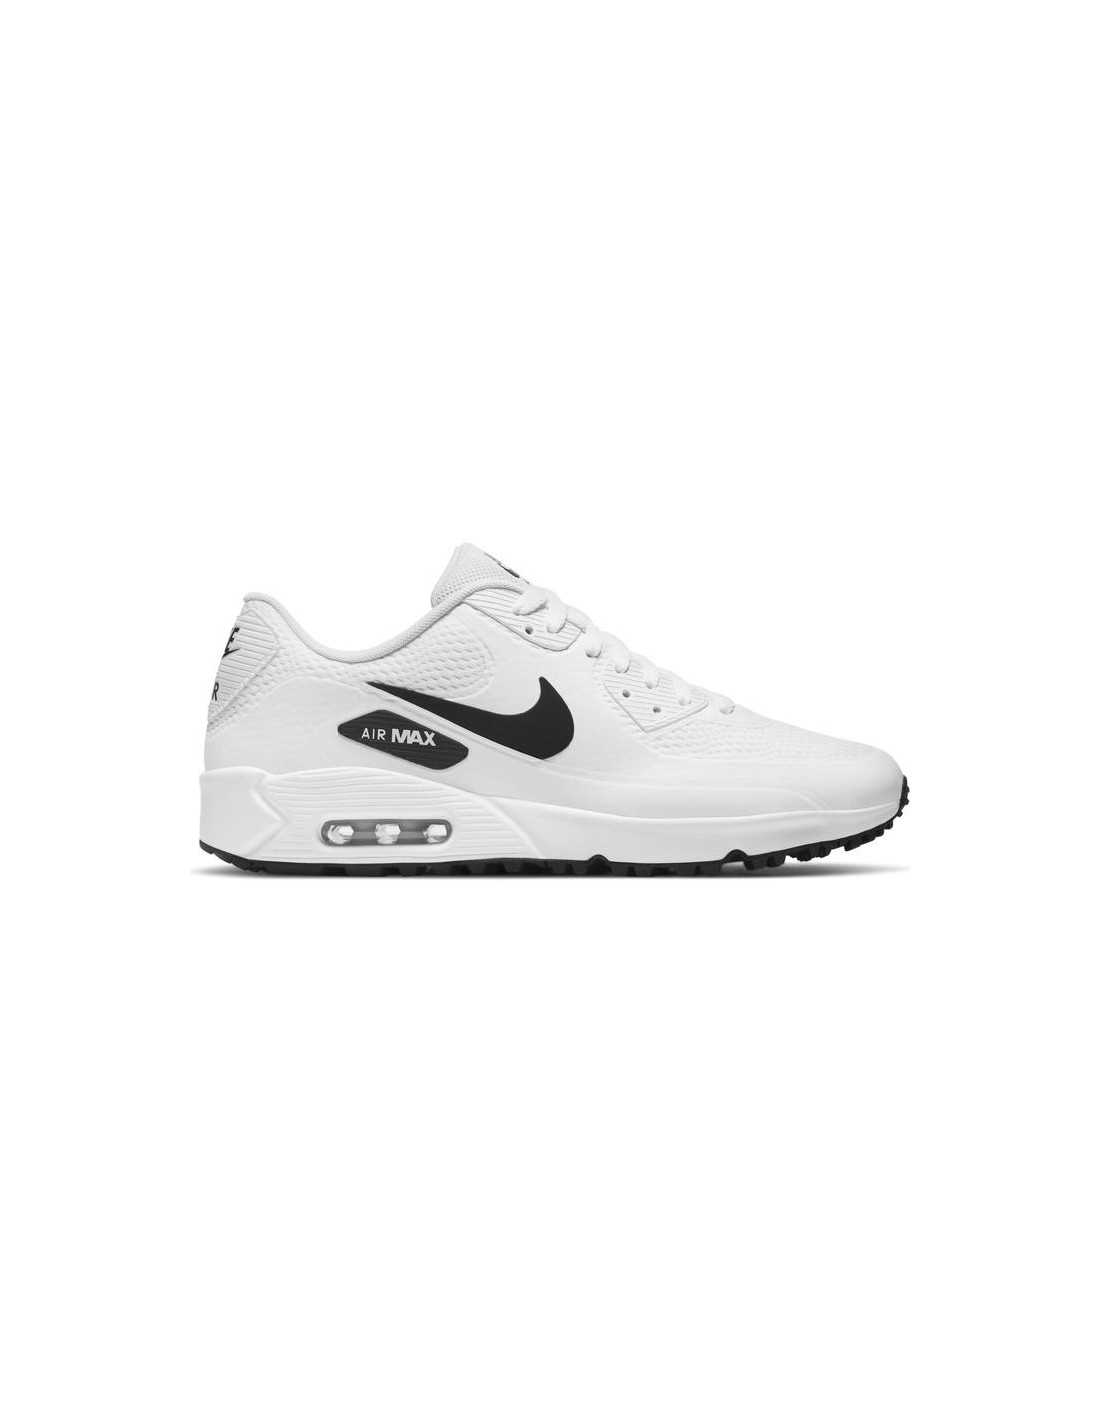 NIKE AIR MAX 90 G WHITE/BLACK - MAN SHOE - Nike Men's Golf Shoes - The ...